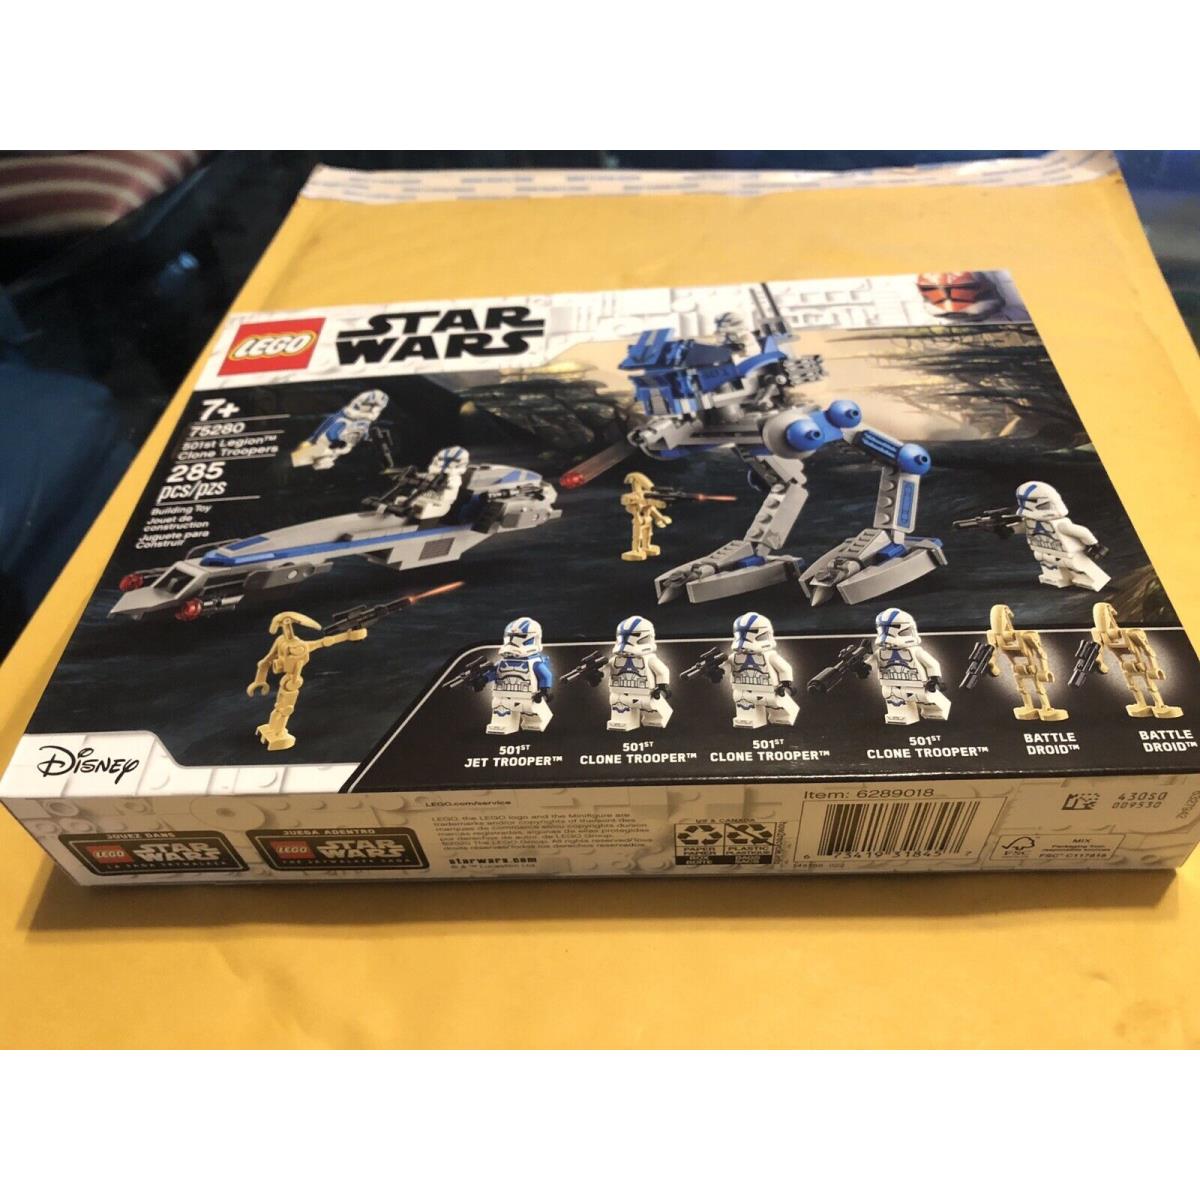 Lego Star Wars 501st Legion Troopers 75280